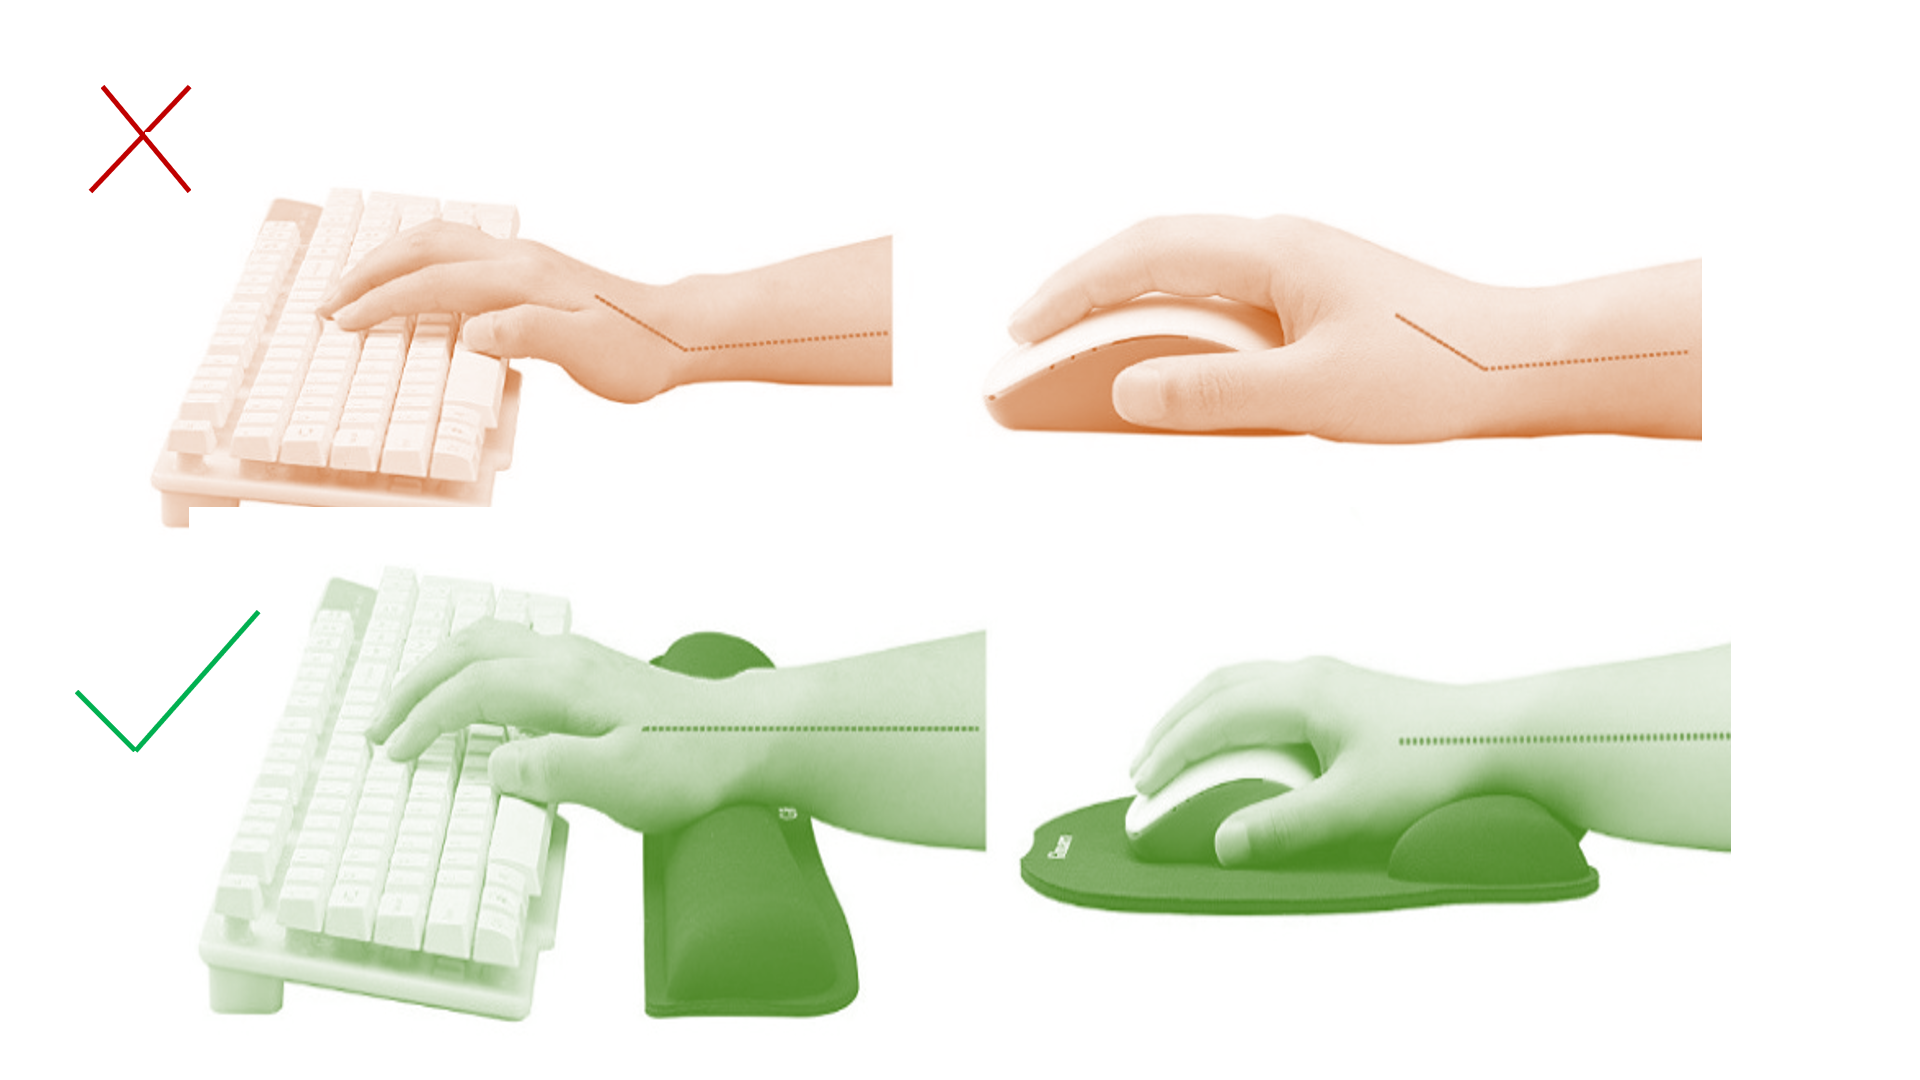 wrist position for keyboard